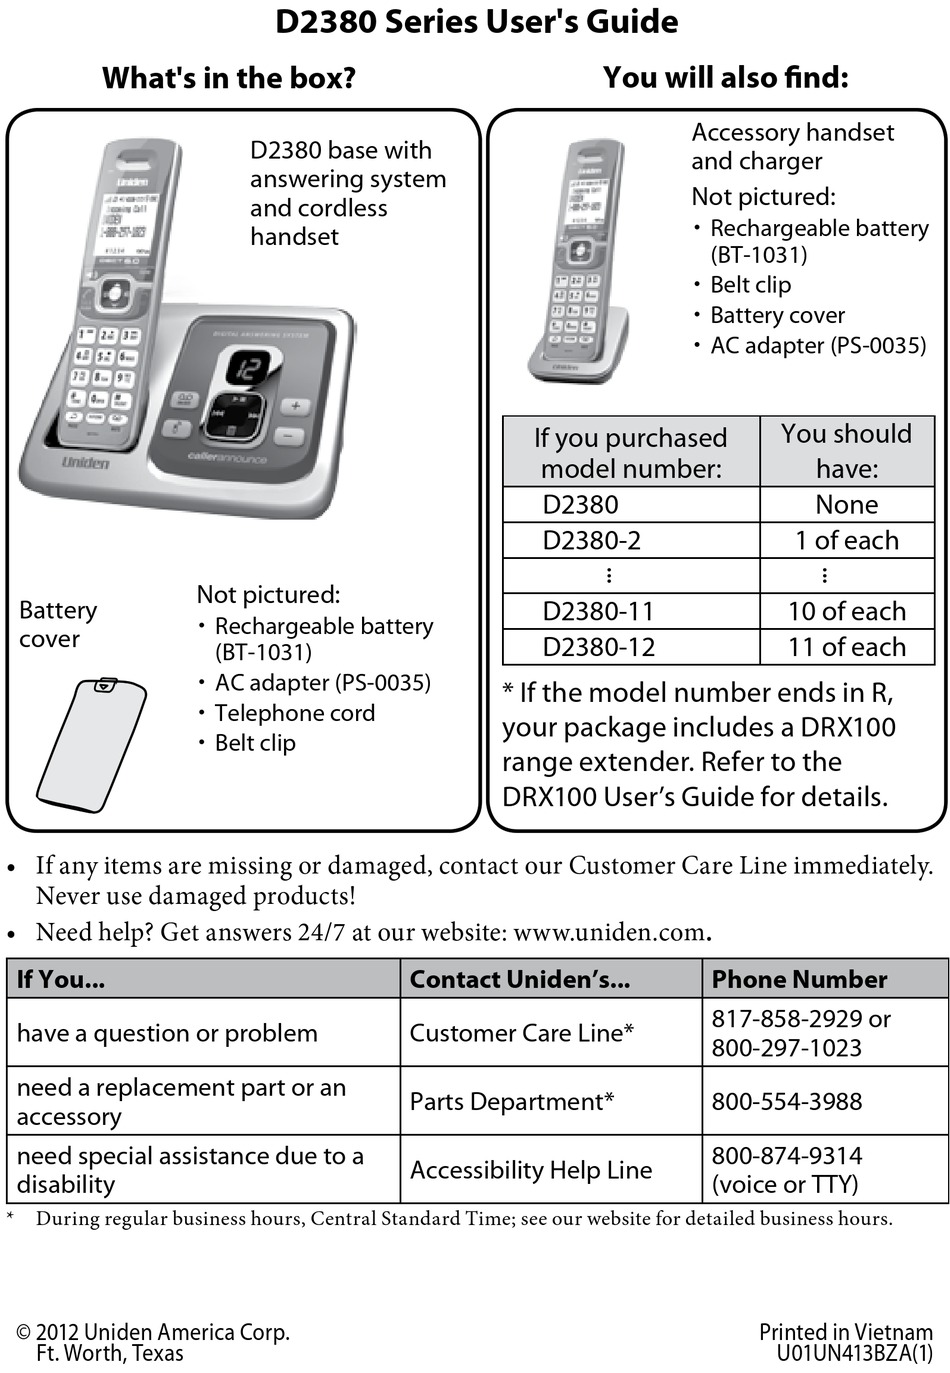 Uniden Accessory handset for D2280 serie 